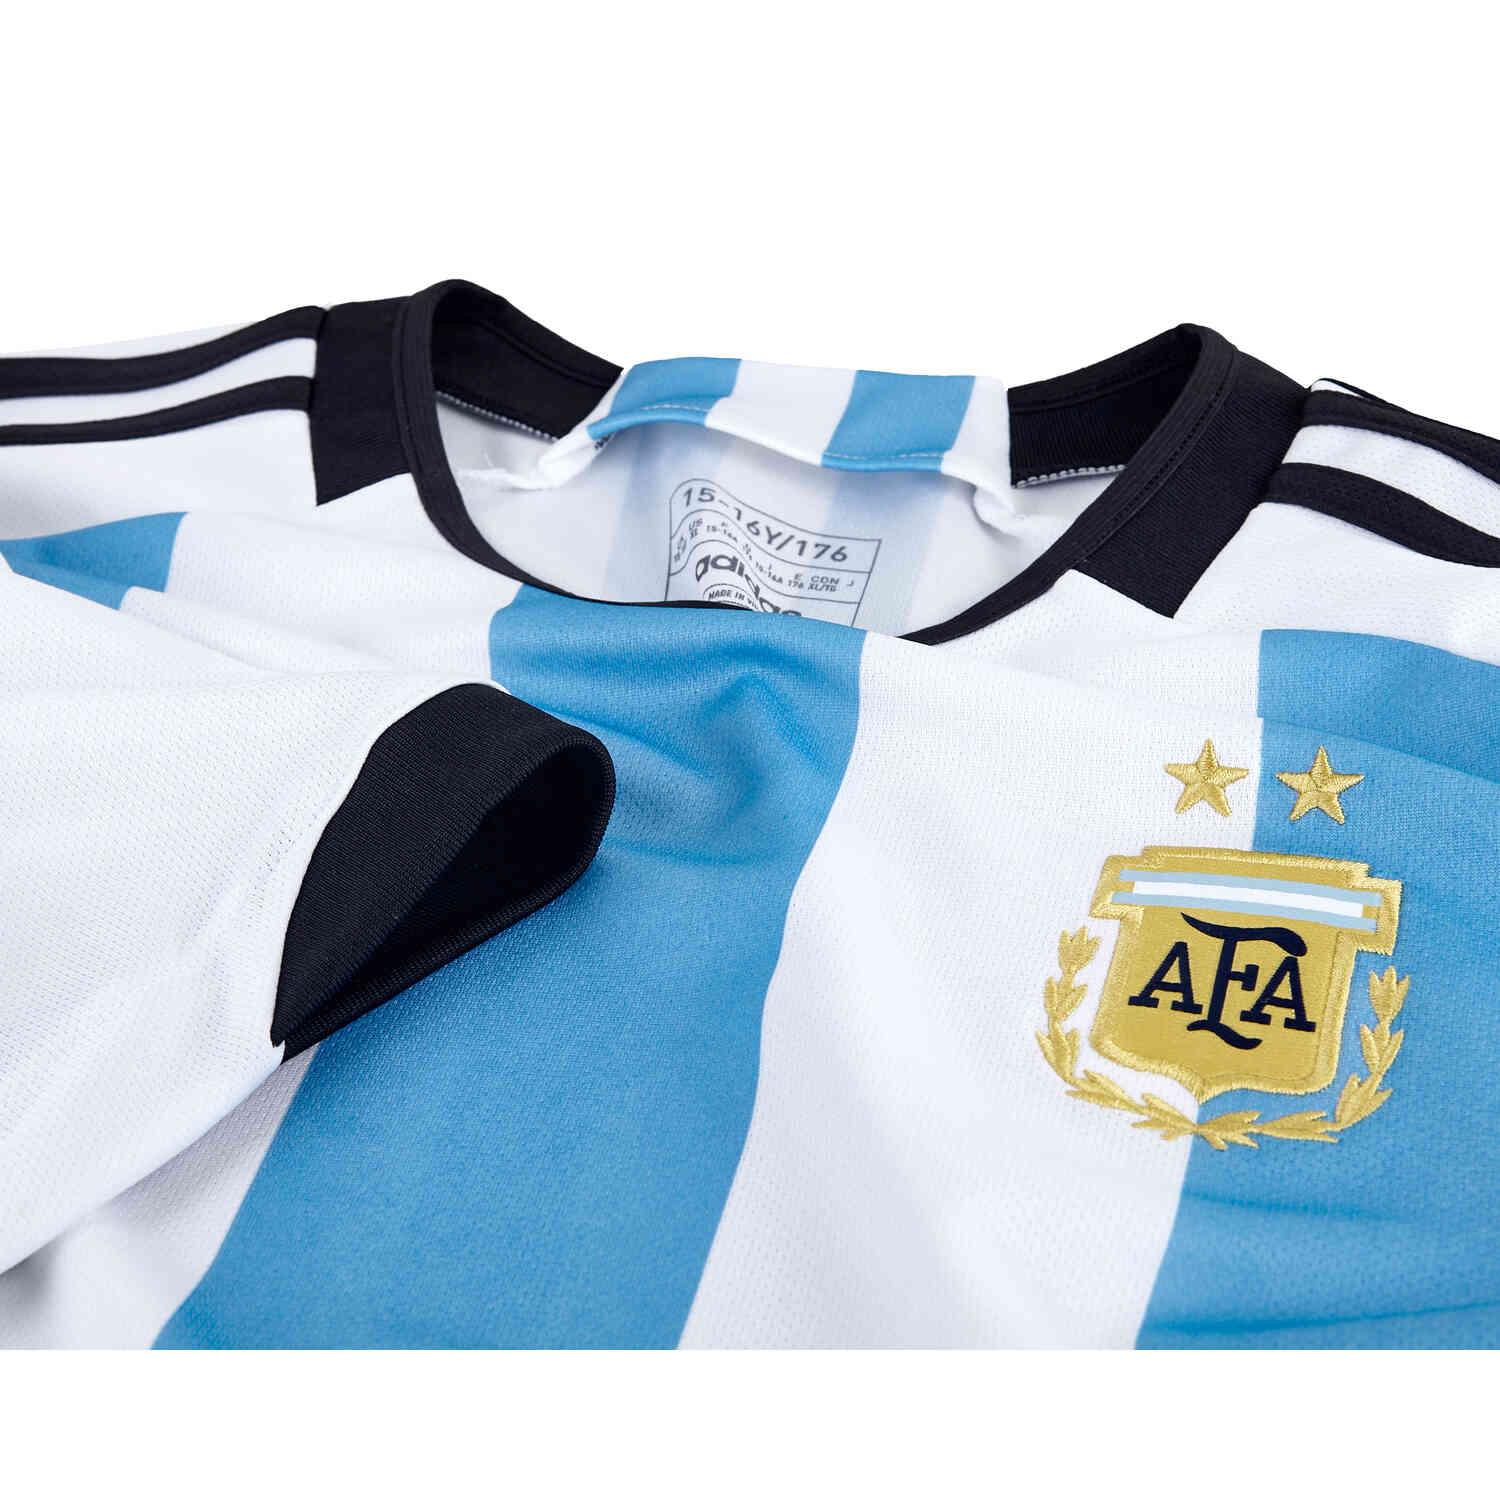 2022 Lionel Messi 3-Star adidas Argentina Home Jersey - SoccerPro